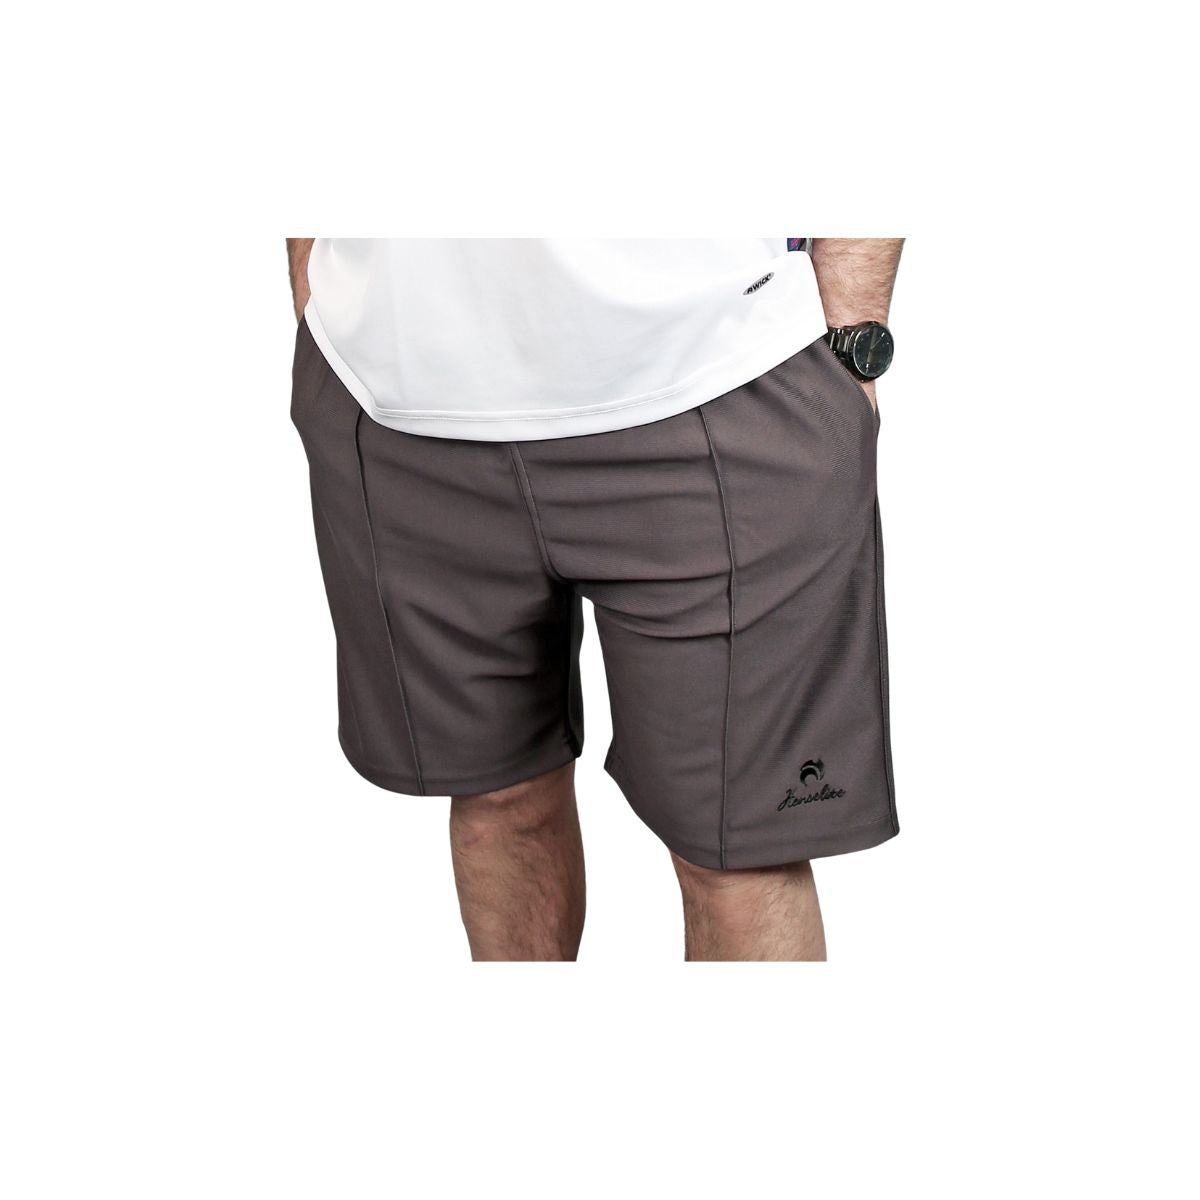 Henselite mens sport bowls shorts - 1